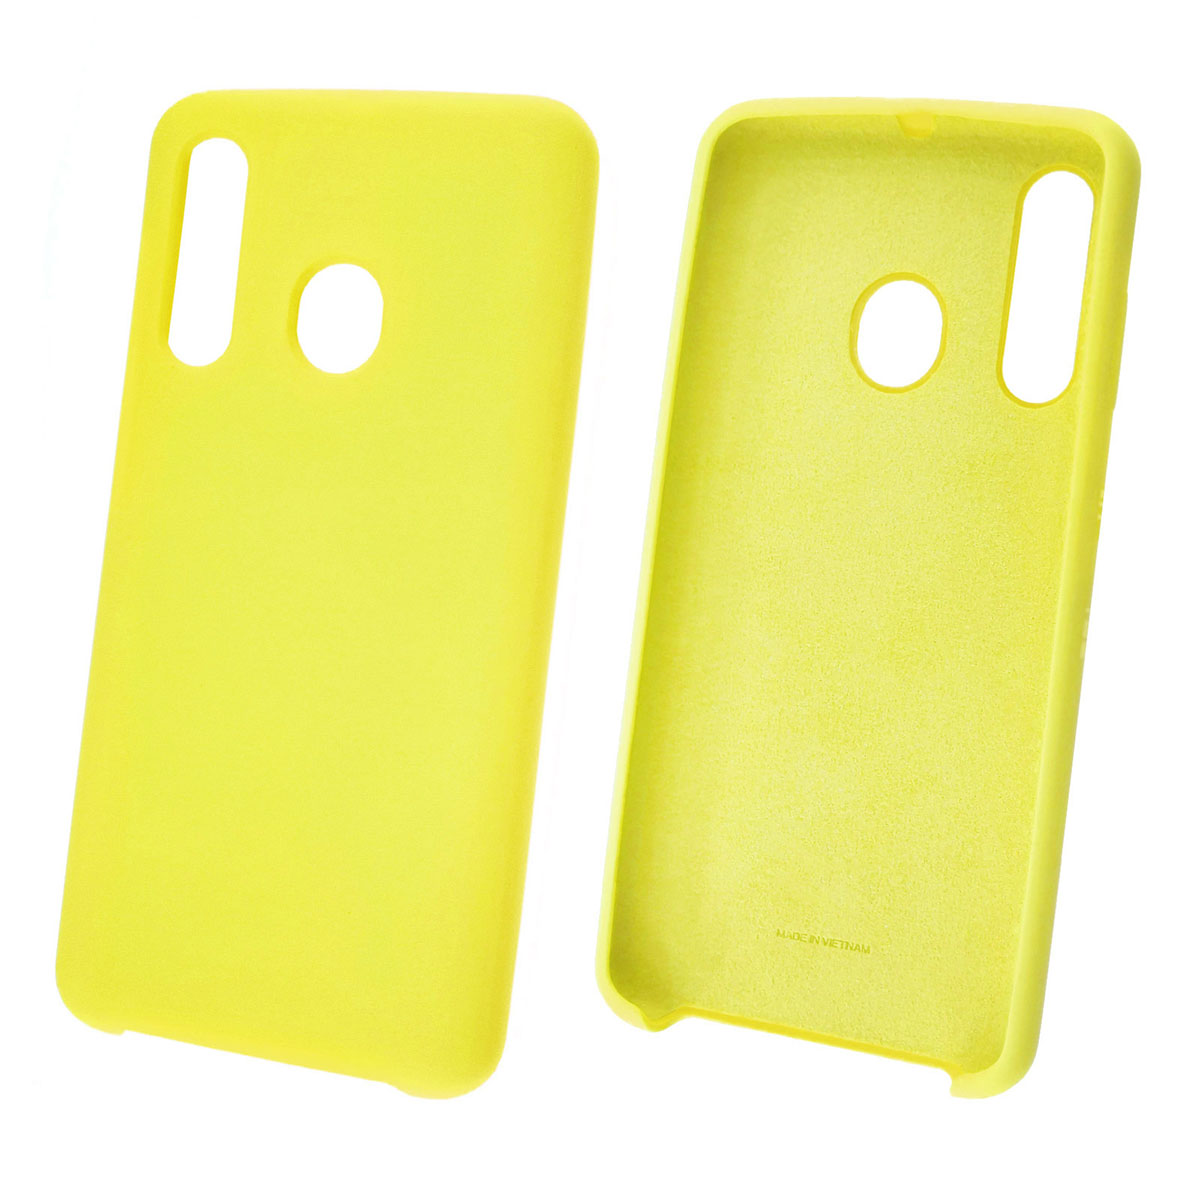 Чехол накладка Silicon Cover для SAMSUNG Galaxy A60 2019 (SM-A605), Galaxy M40 (SM-M405), силикон, бархат, цвет ярко желтый.